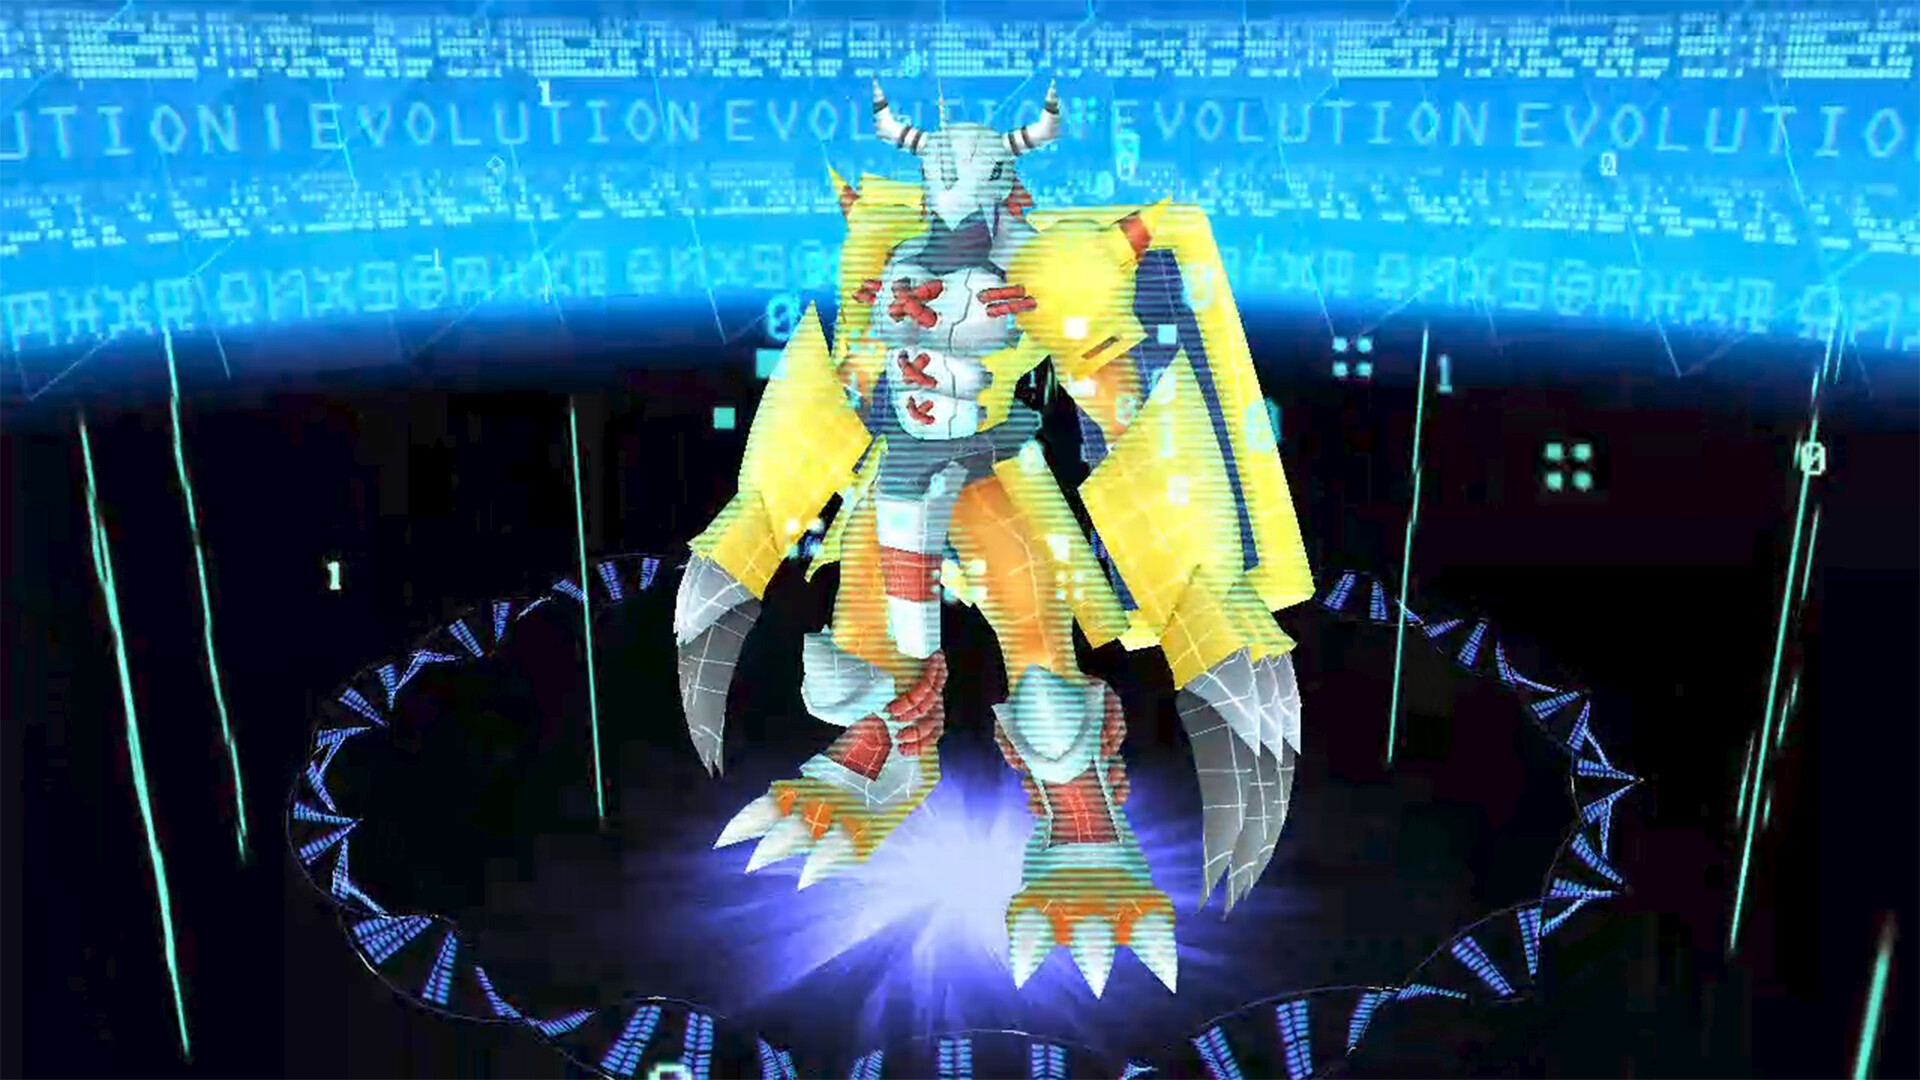 Digimon World: Next Order Steam CD Key